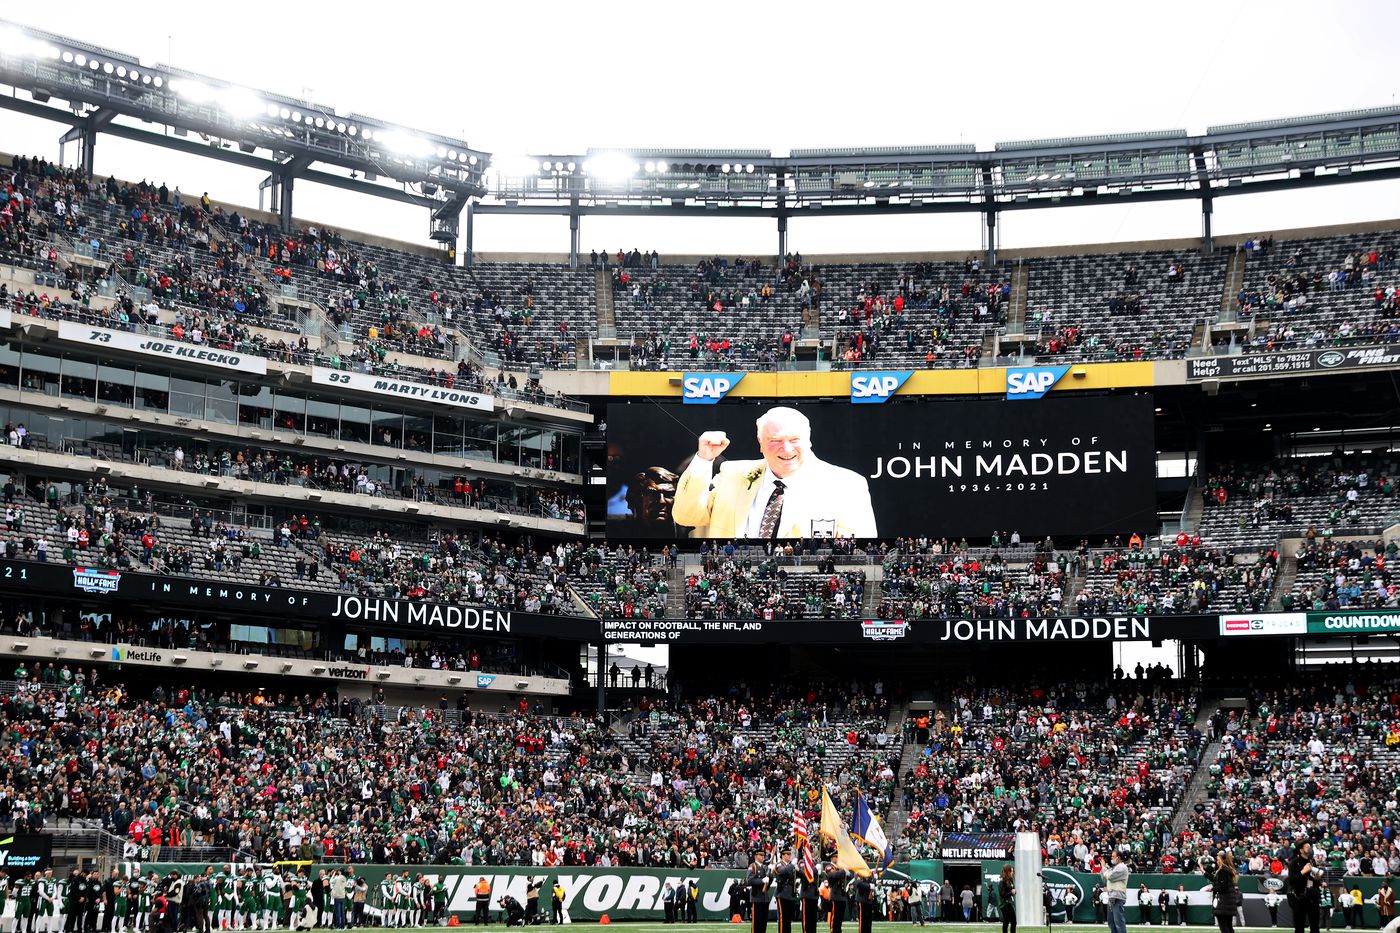 In Memory of John Madden sign in a stadium.